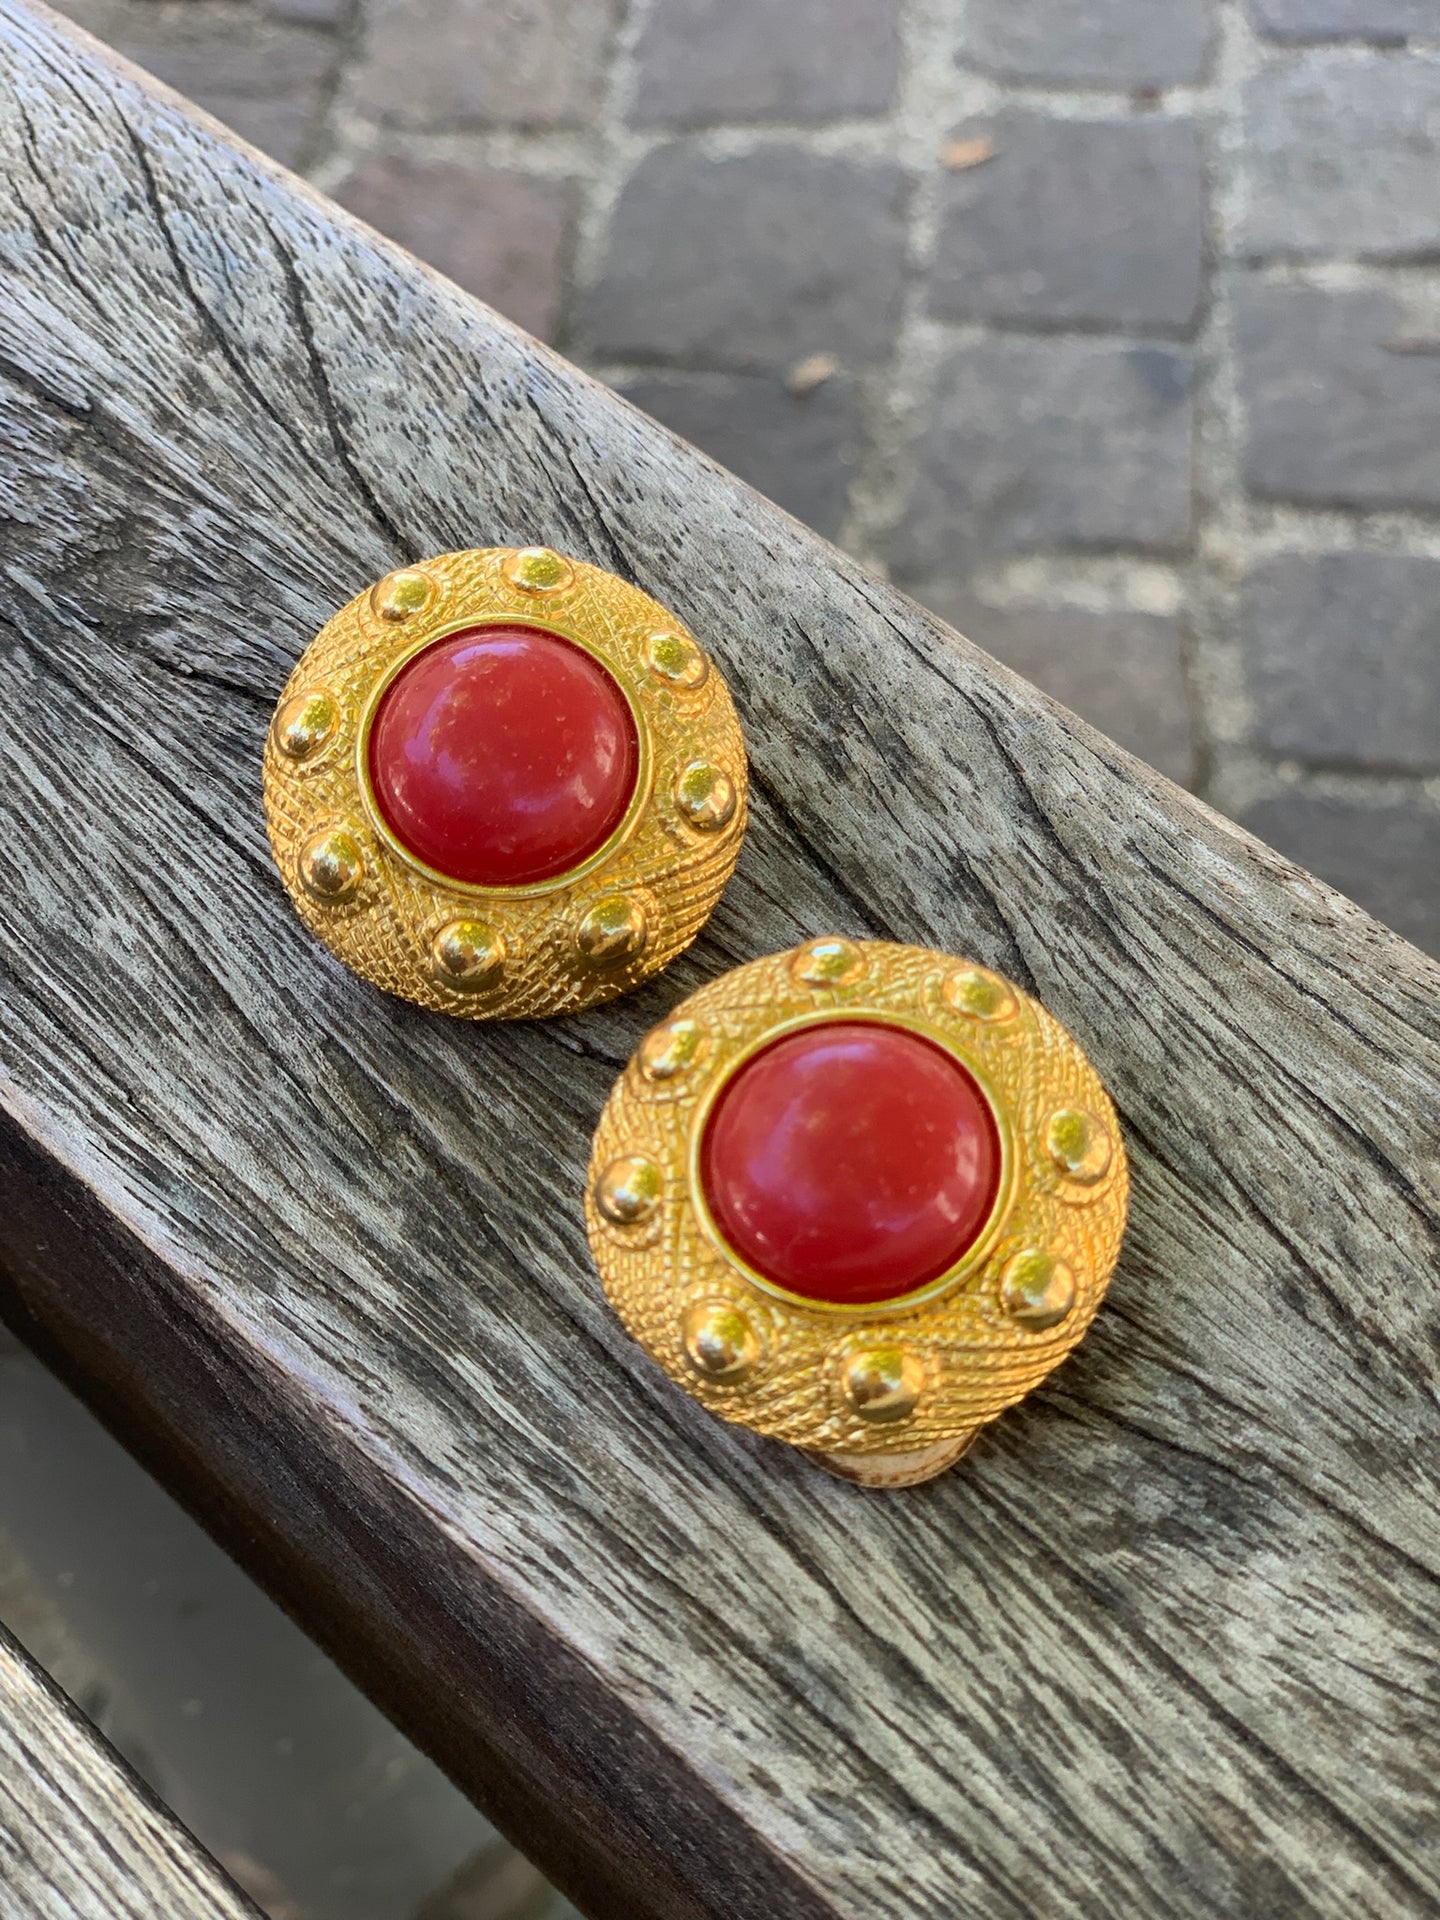 Vintage Chunky Red Stone Earrings